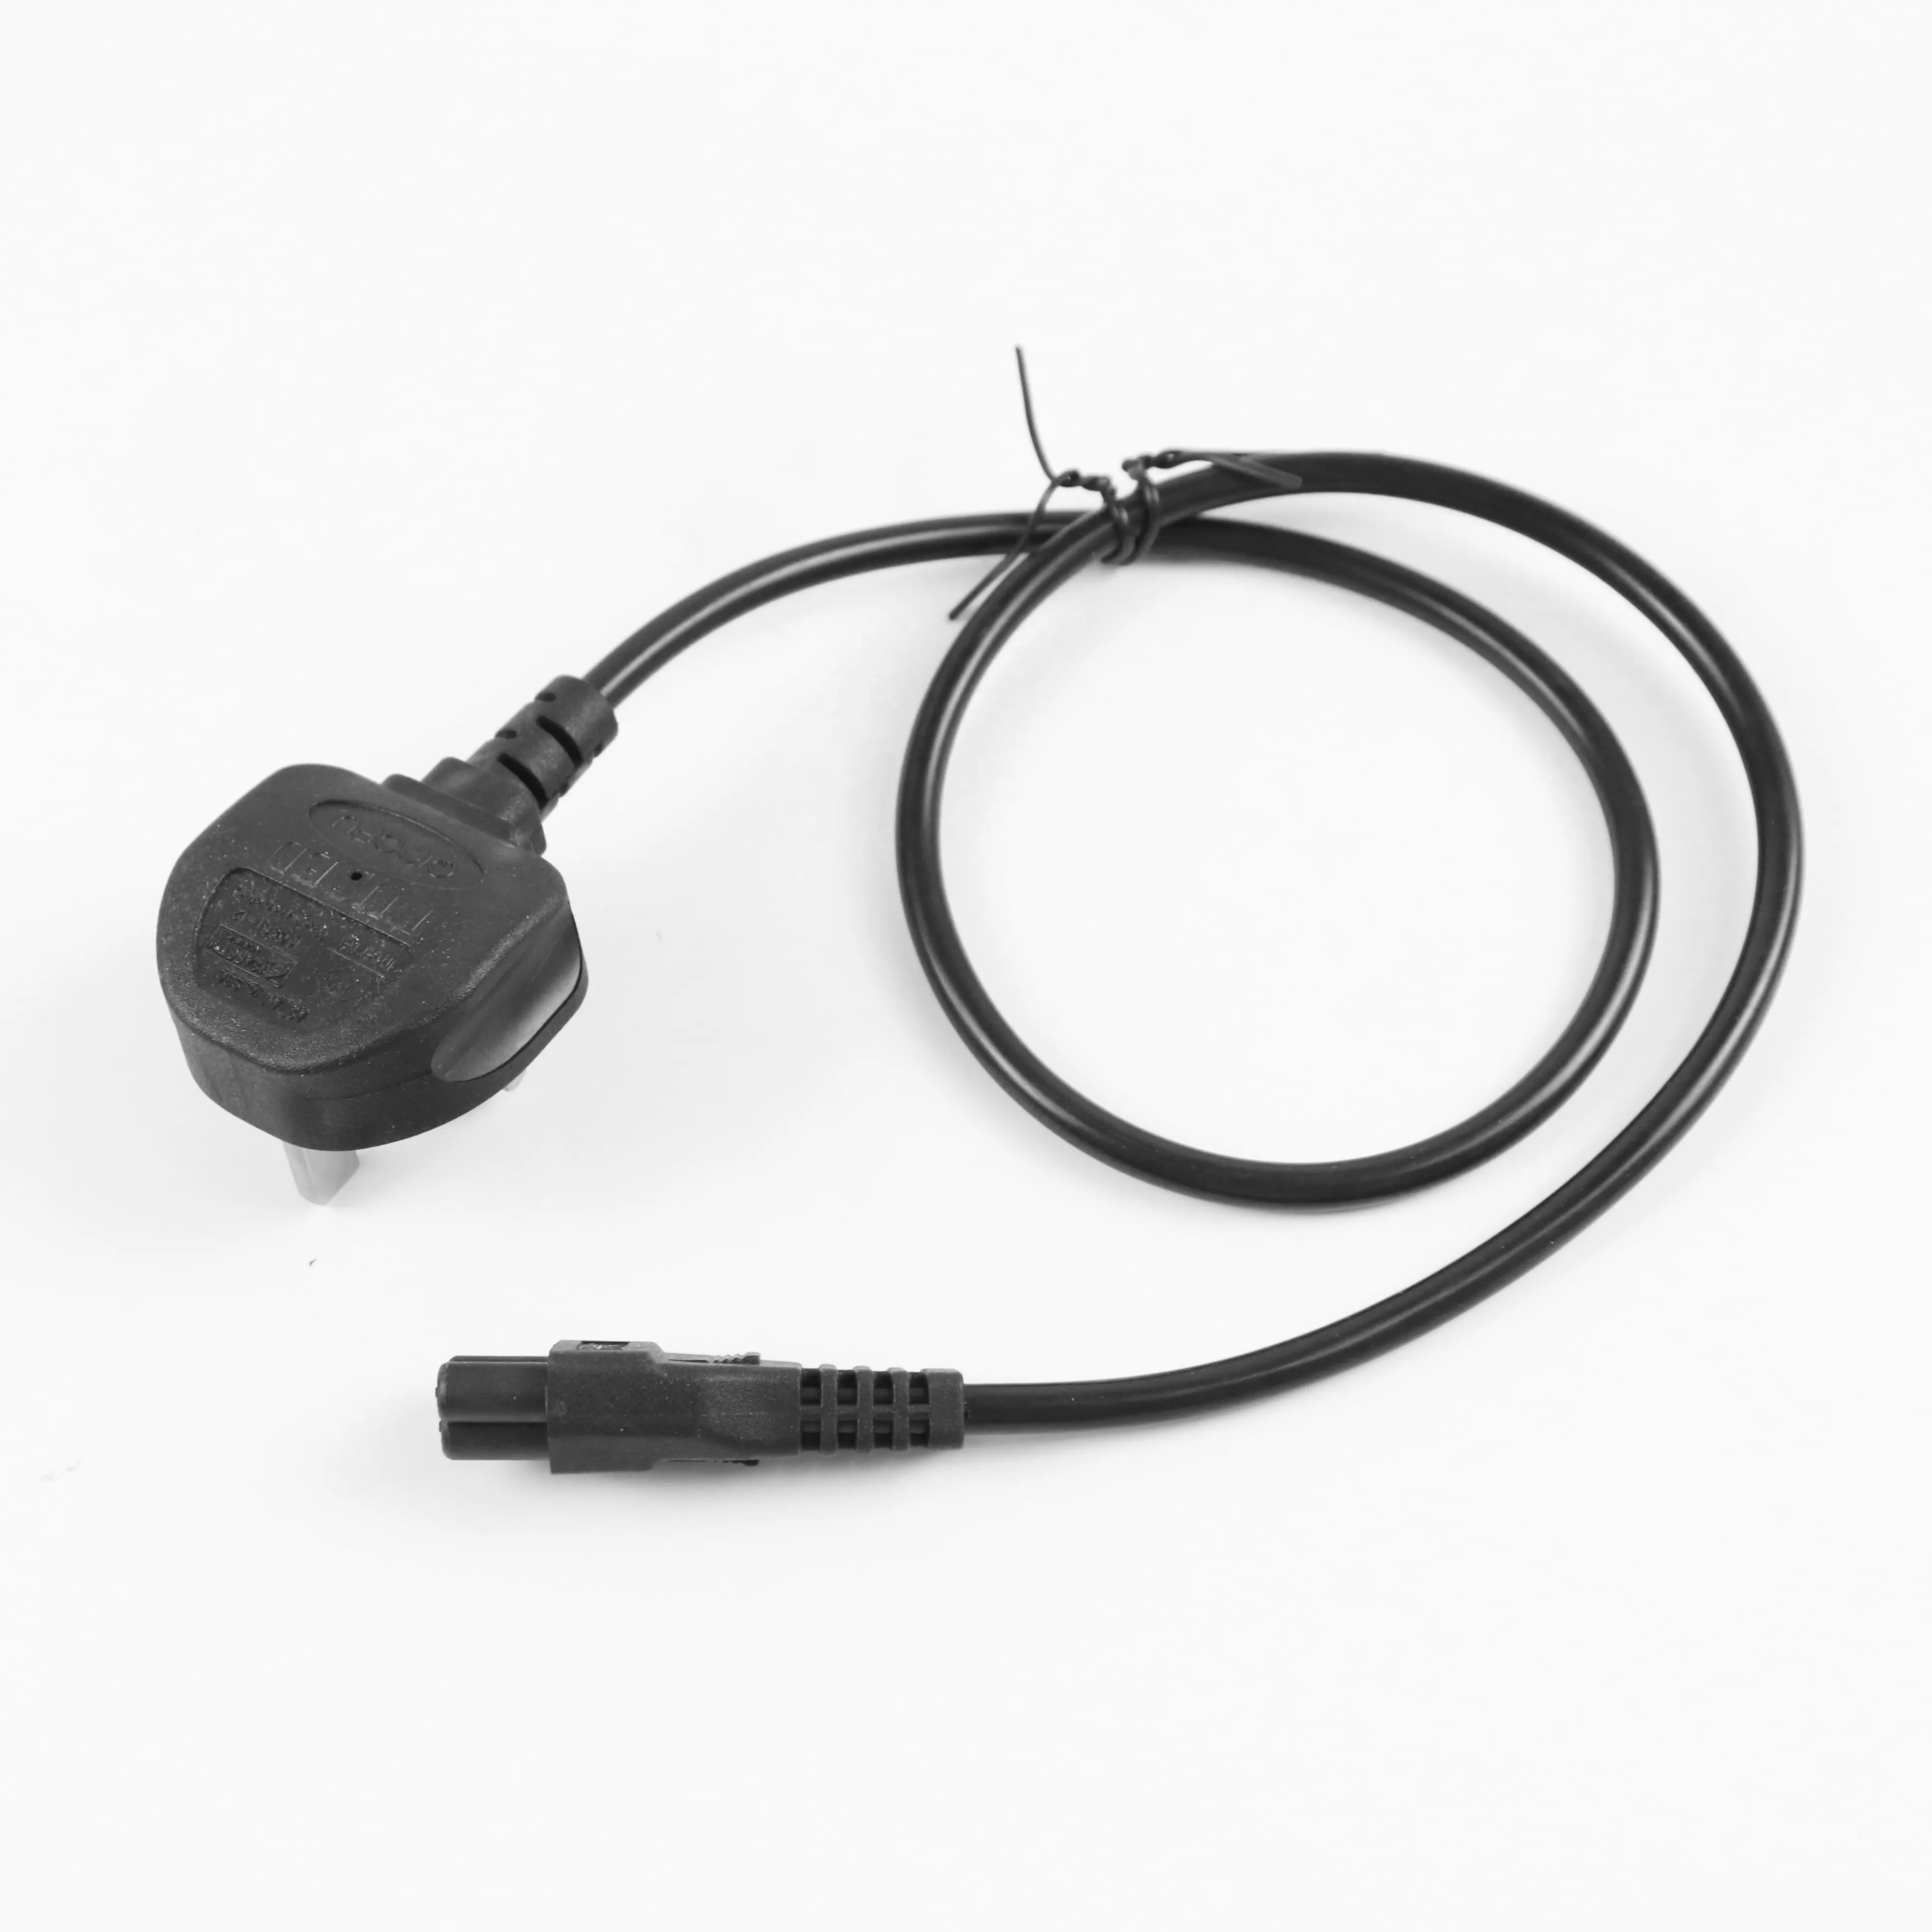 United Kingdom BSI KEMA Standard Three Pin Power Cord Plug UK BS Standard Power Cord With Mickey Mouse End